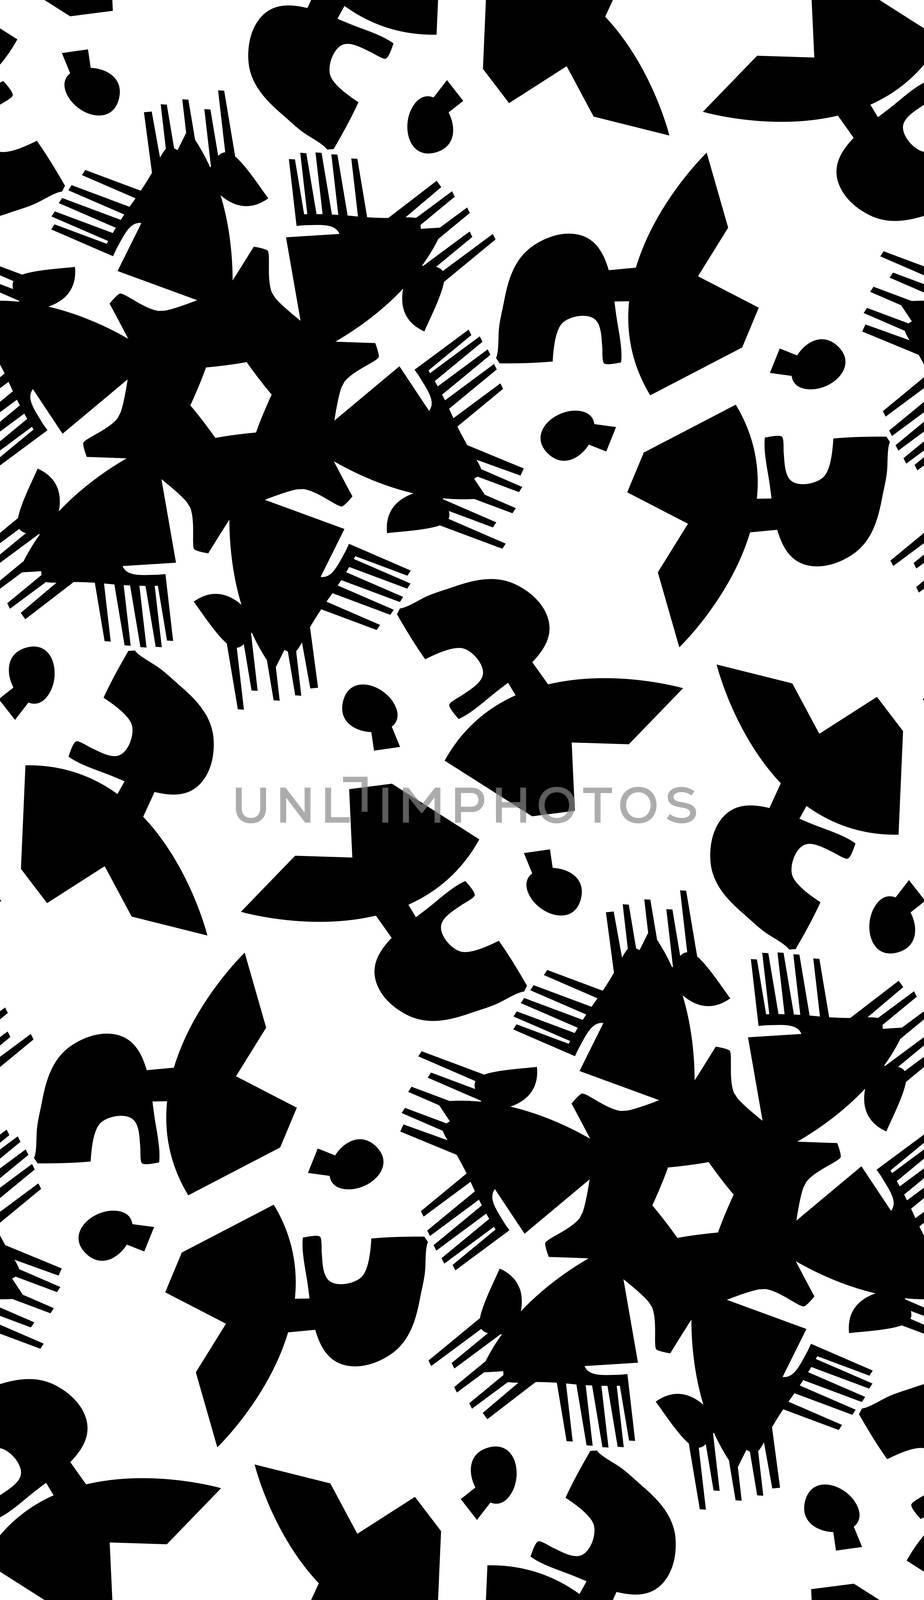 Monotone black and white seamless pattern of talking heads